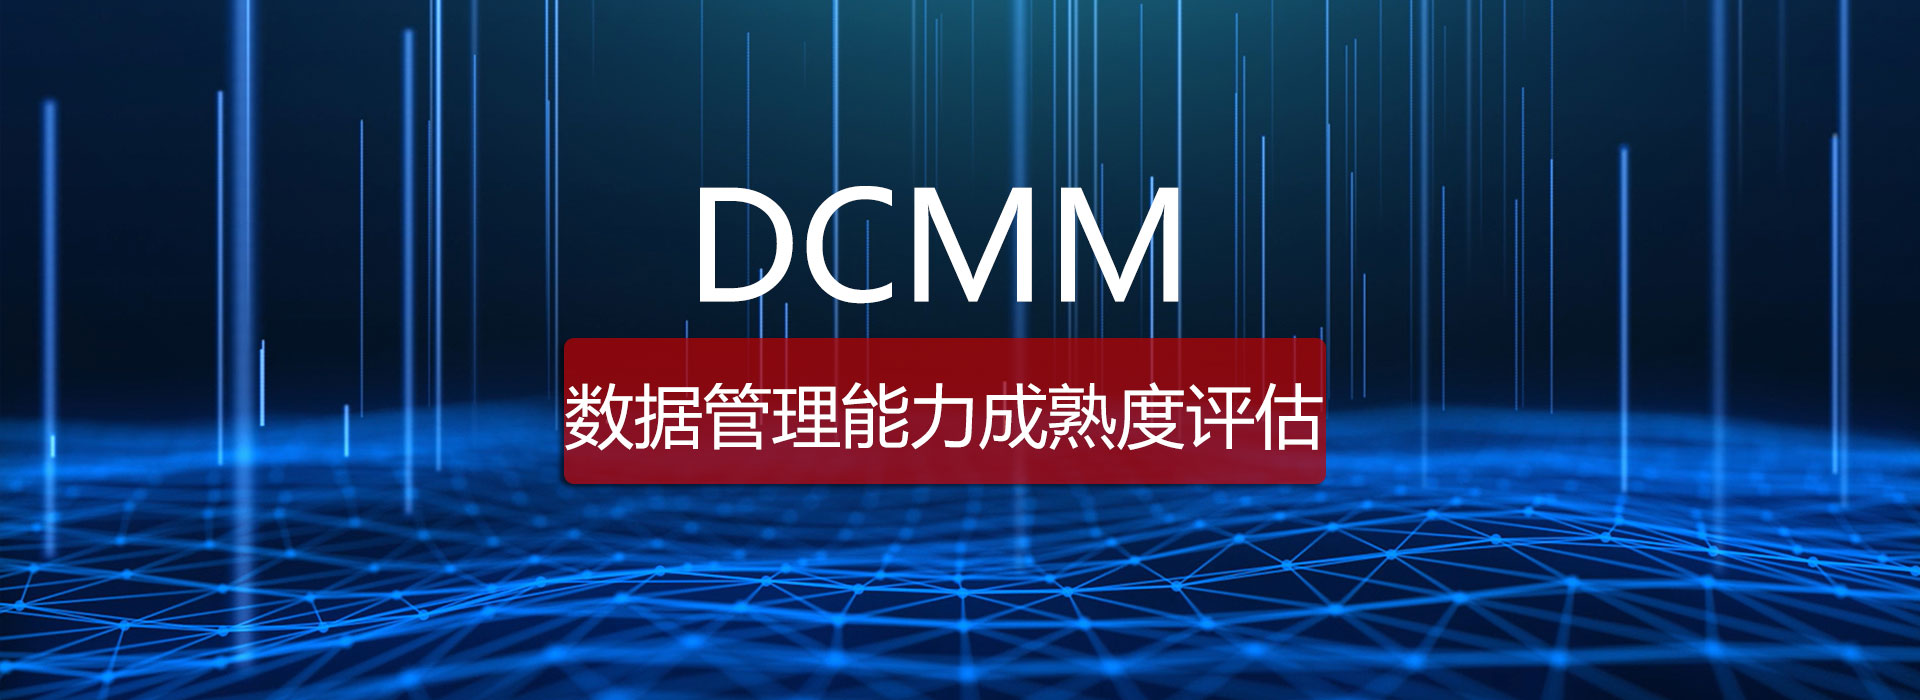 dcmm1